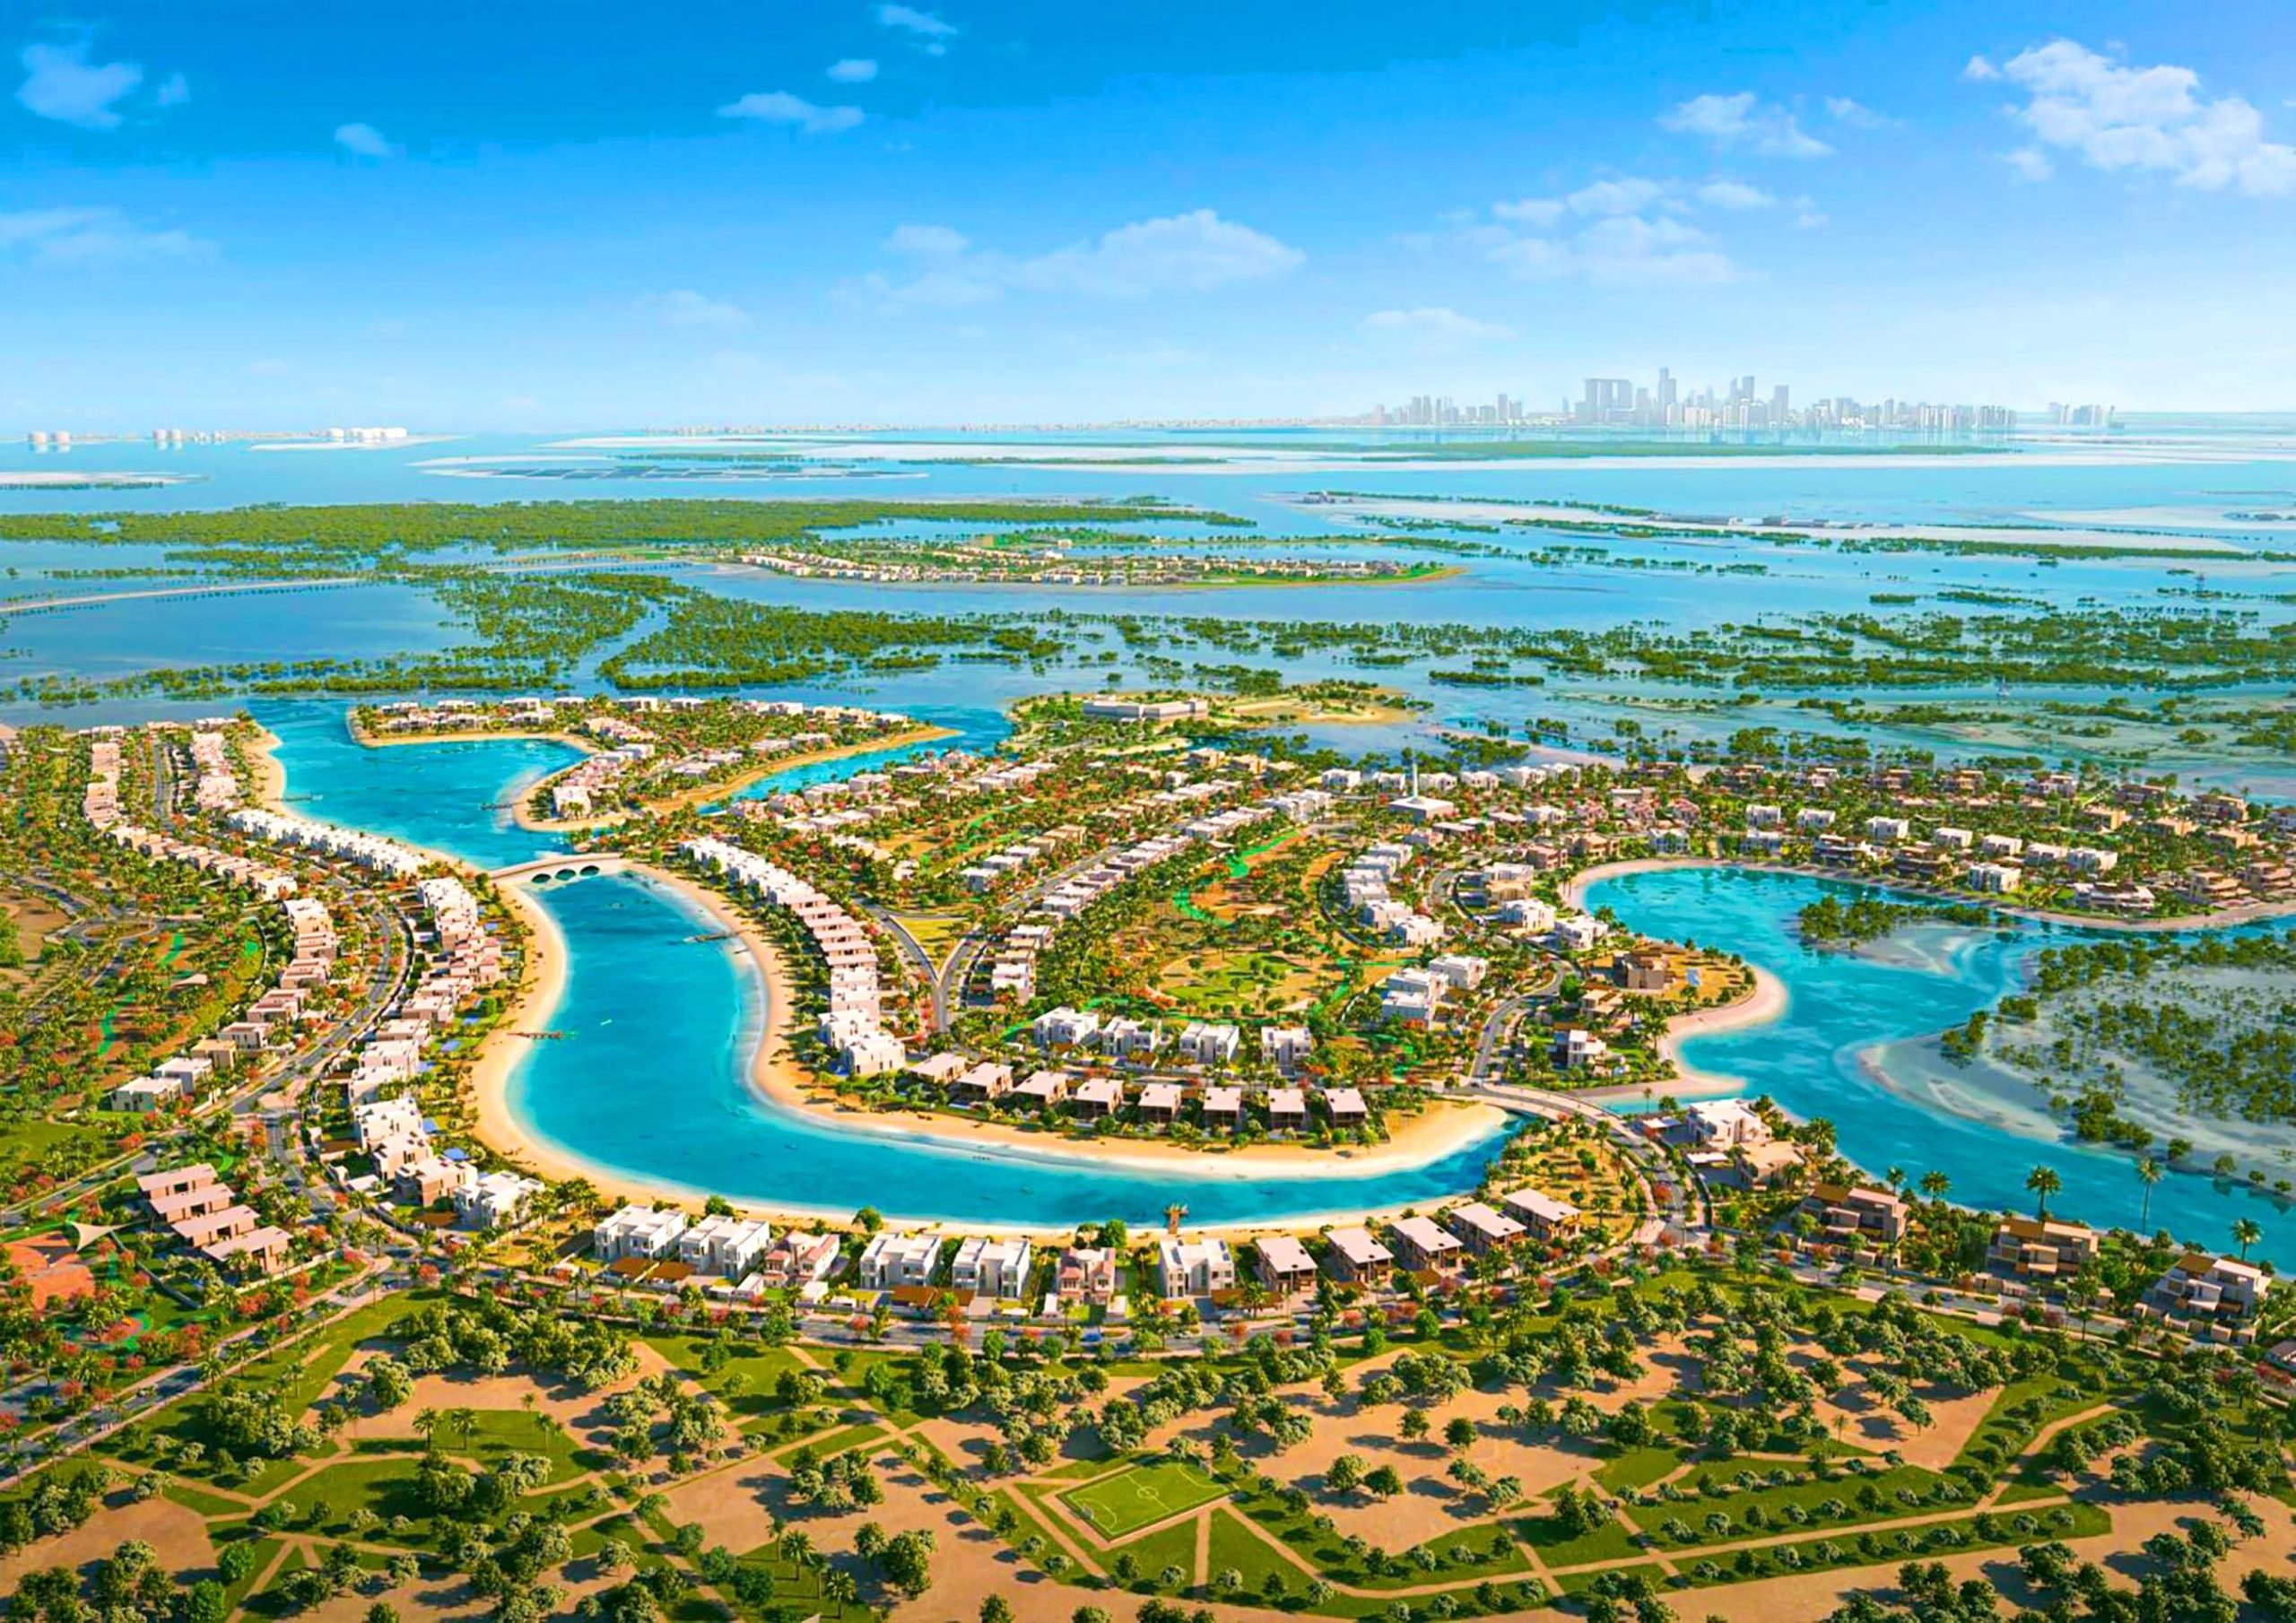 JIIC's Ain Al Maha village will include 240 villas facing the sea and the mangrove